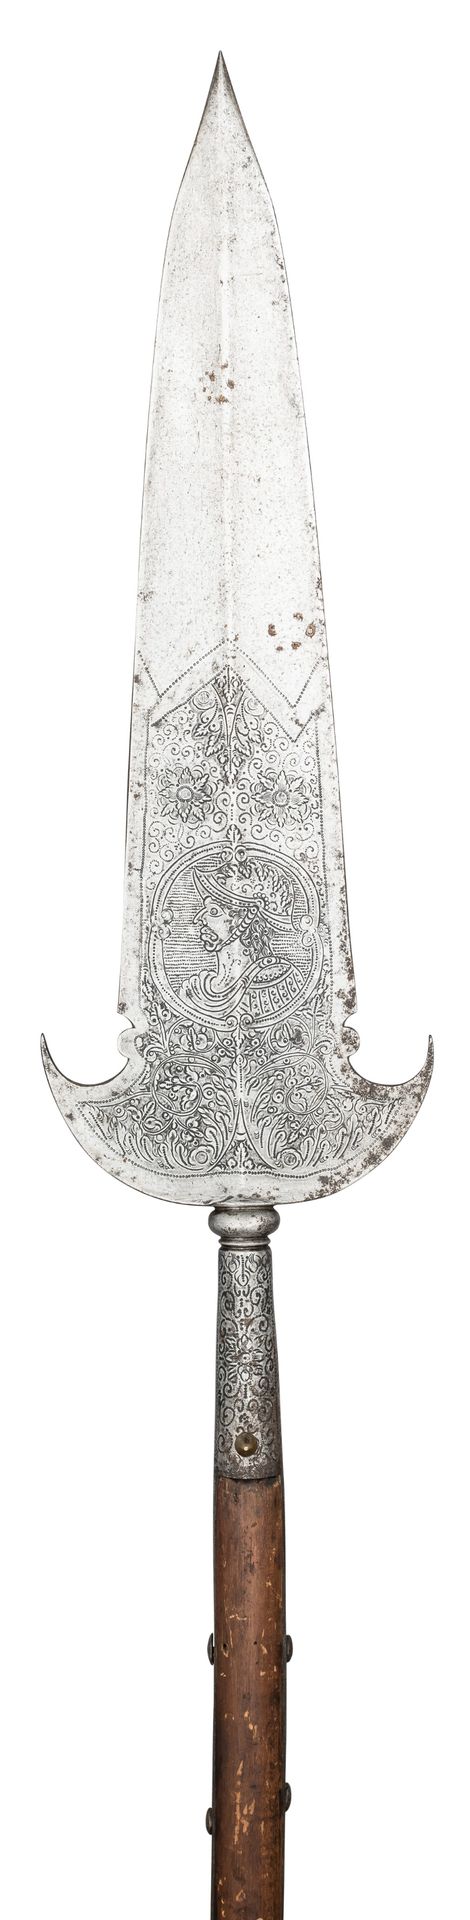 ? A FRENCH DECORATED PARTISAN, EARLY 17TH CENTURY ⓜ 法国装饰的游击队，17世纪初。宽大的锥形空心钻石截面的中&hellip;